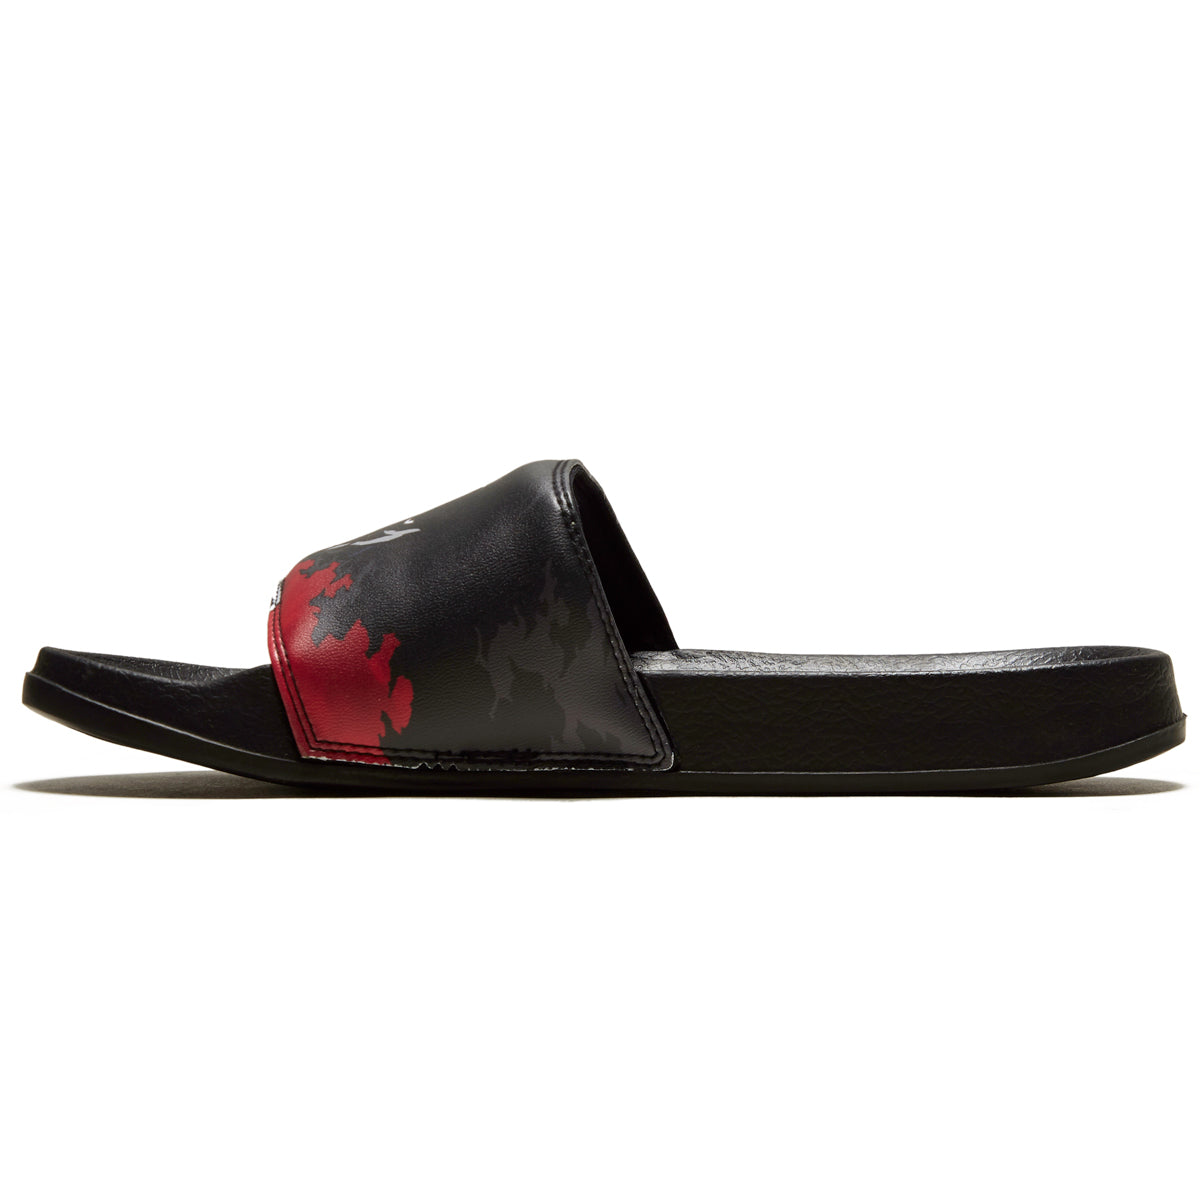 DGK x Afro Samurai Afro Slides Shoes - Black image 2